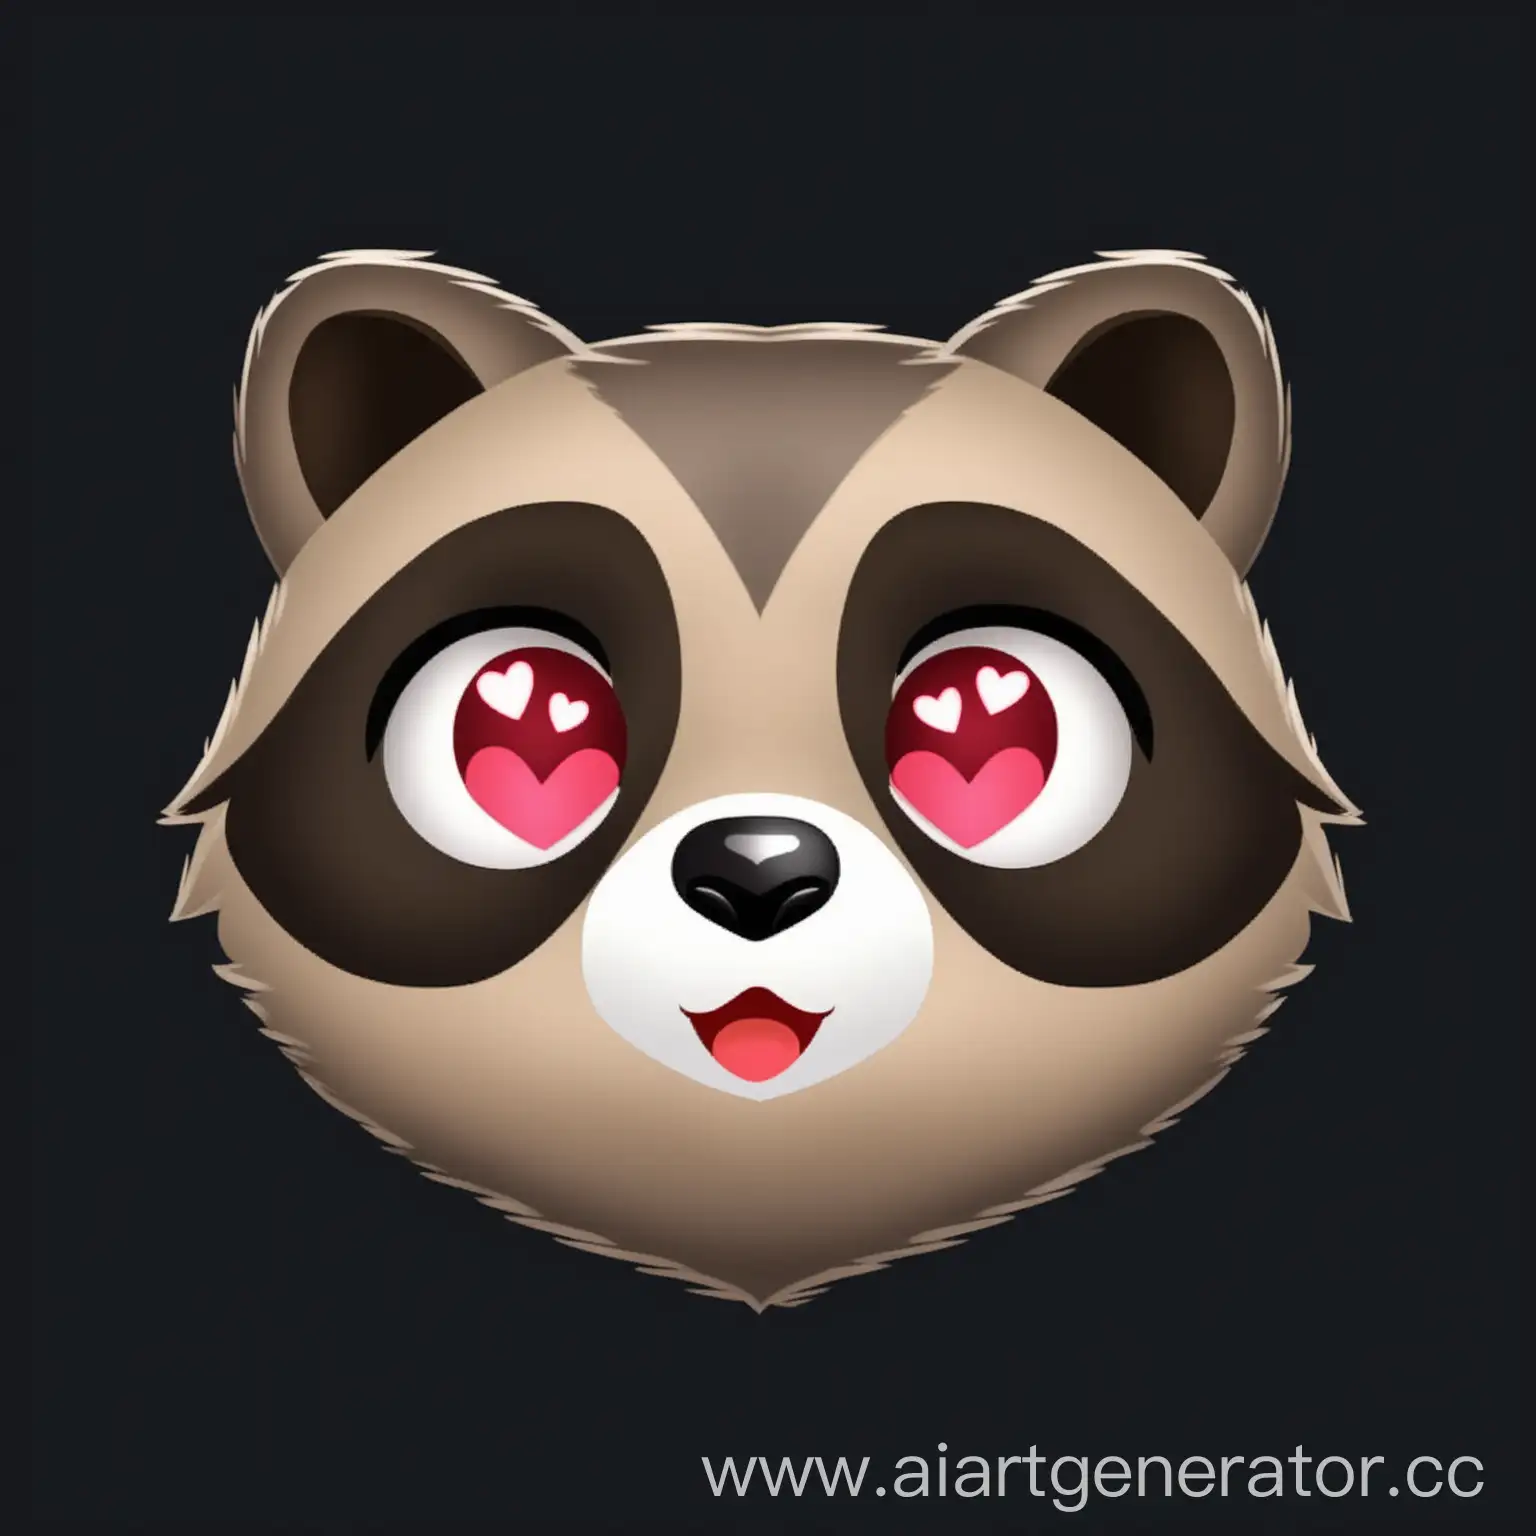 Raccoon-Emoji-with-Heart-Eyes-on-Black-Background